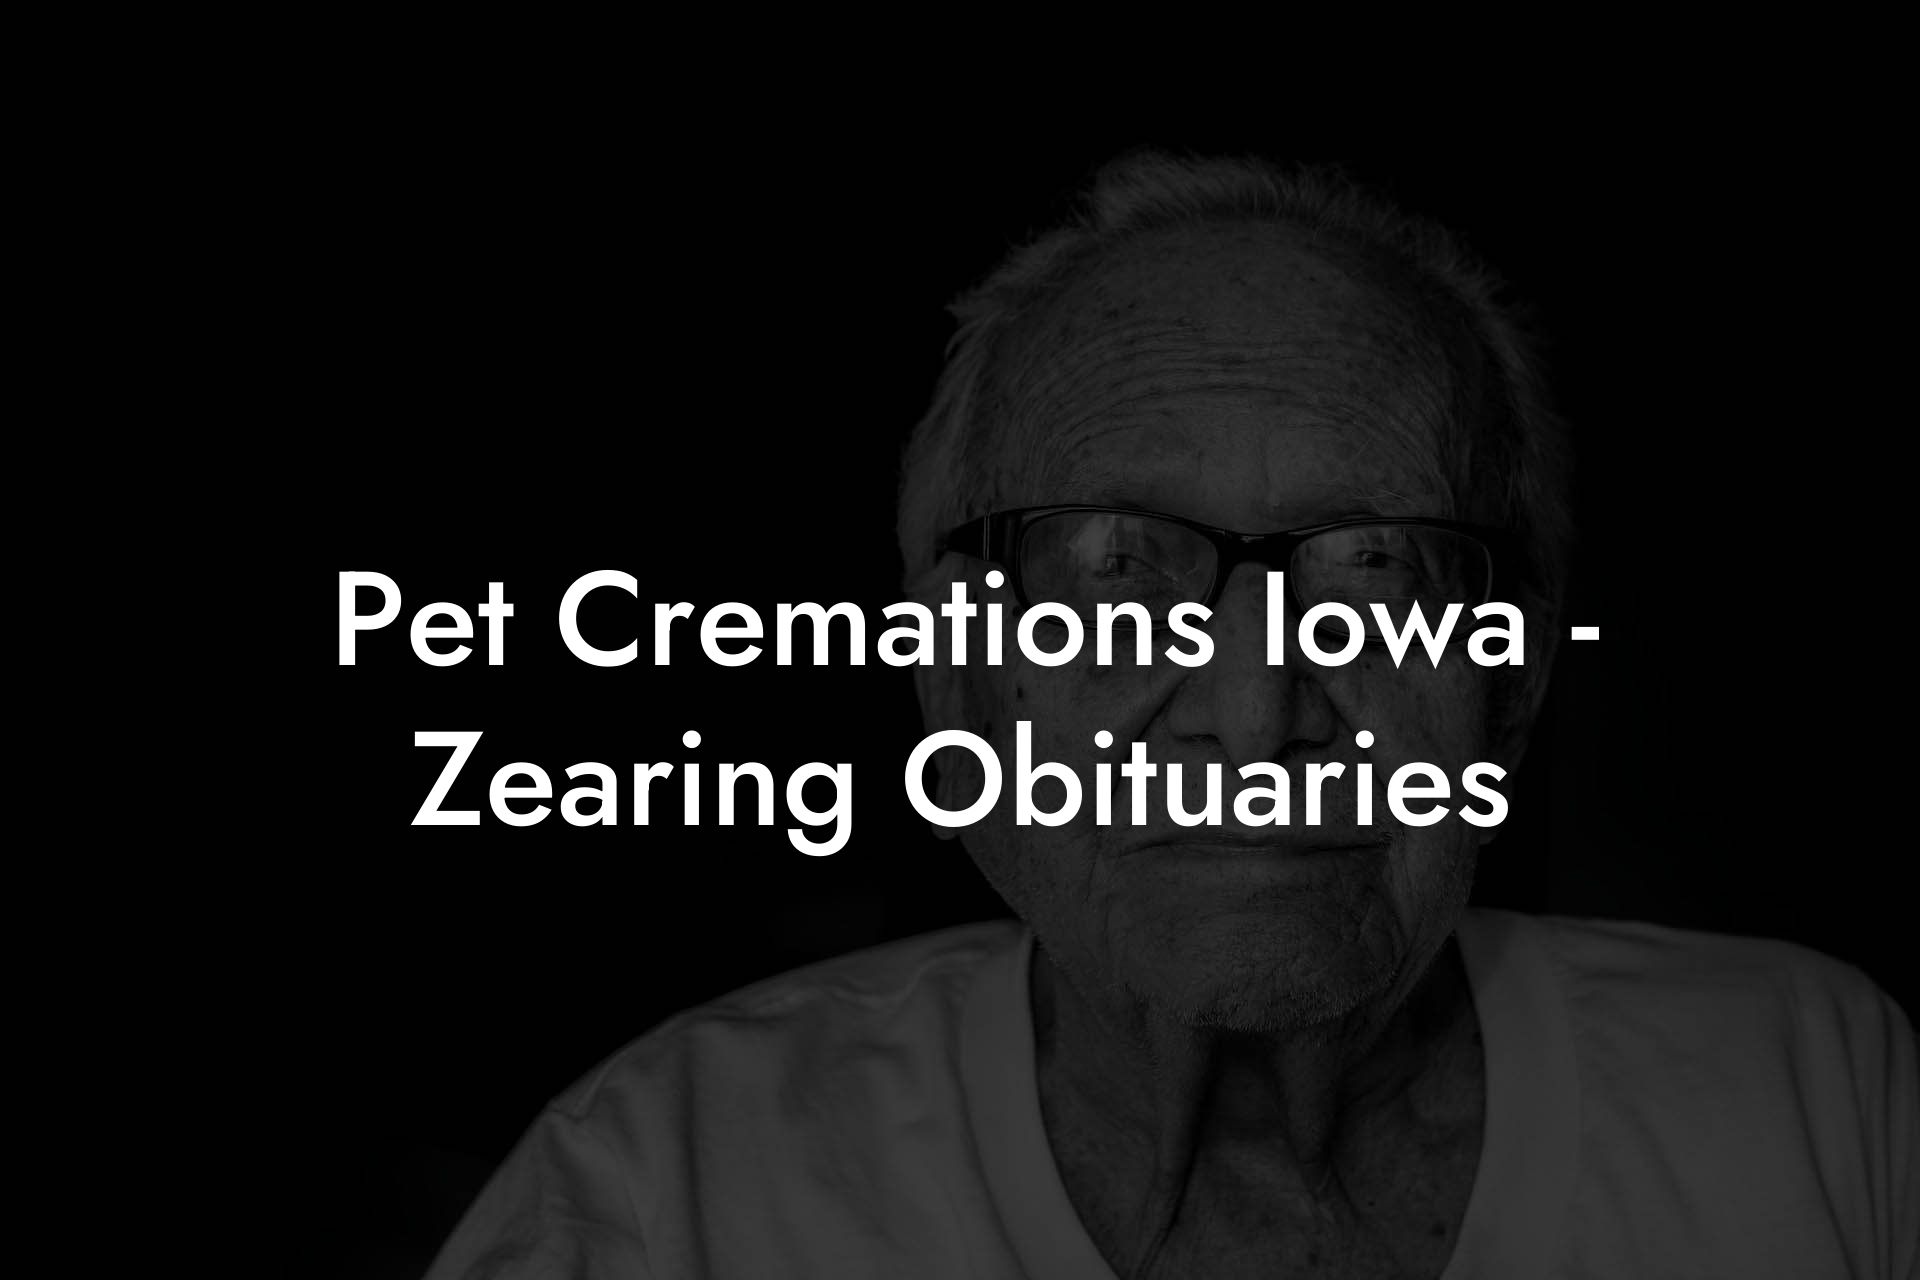 Pet Cremations Iowa - Zearing Obituaries